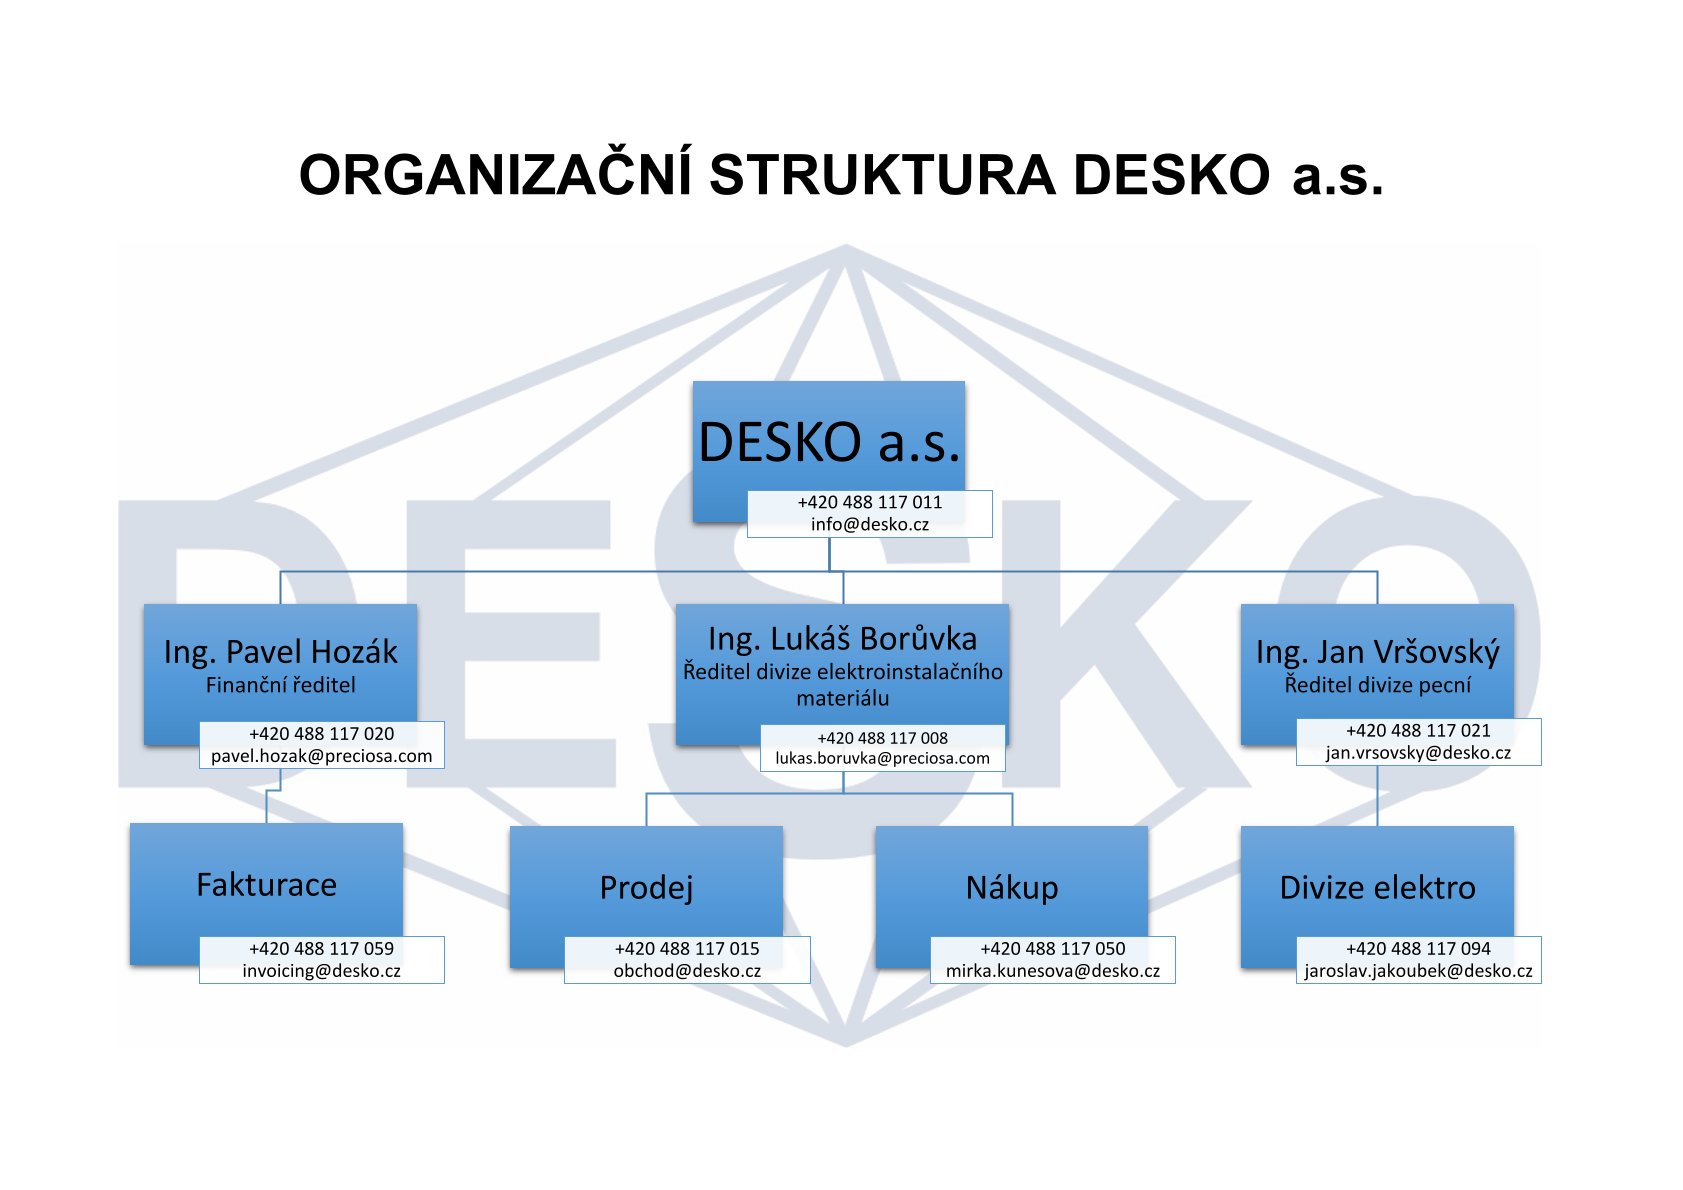 org-struktura-desko-copy-1.jpg